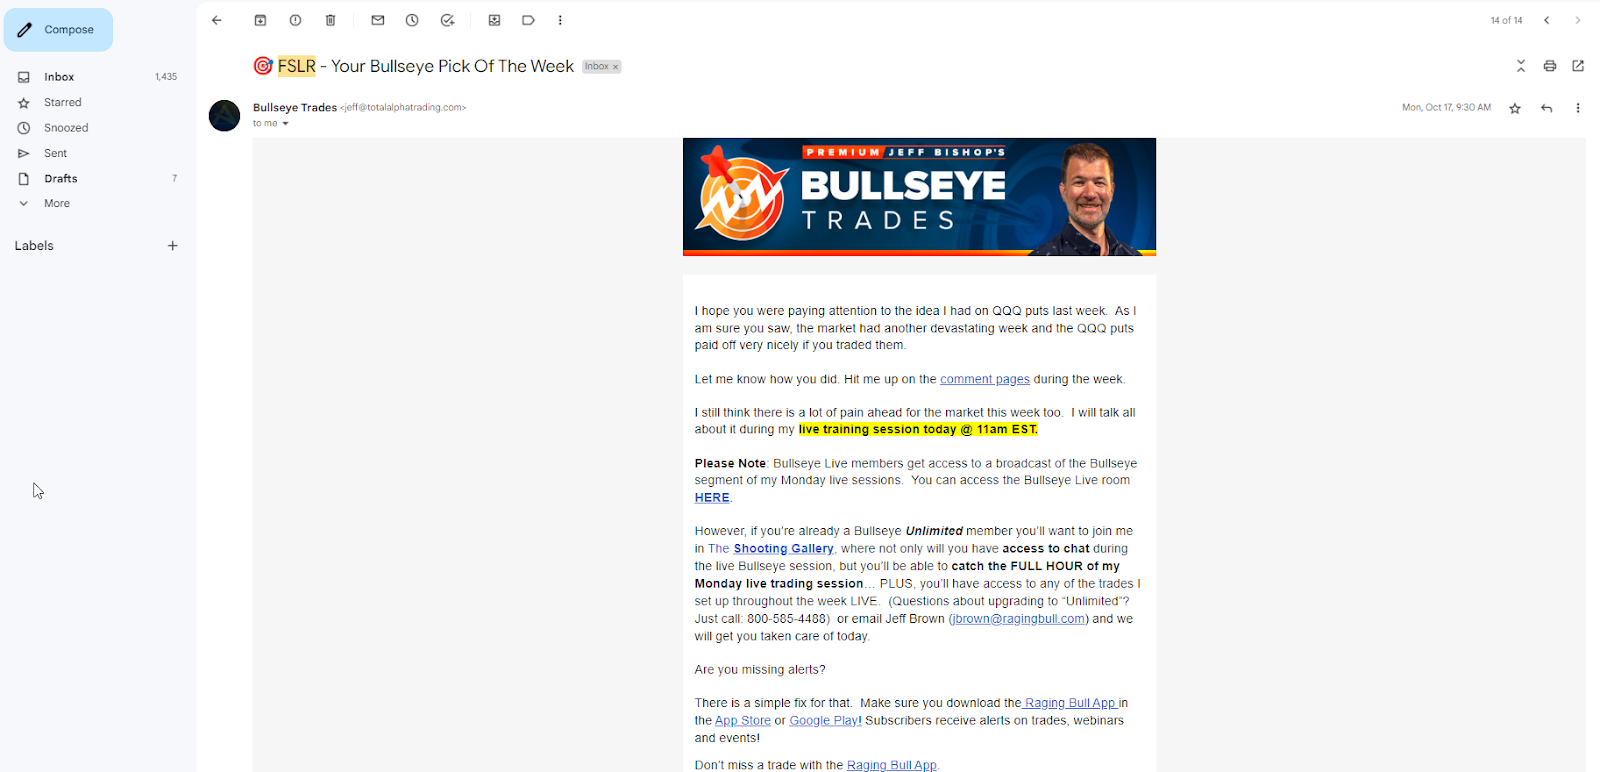 Bullseye Trades email